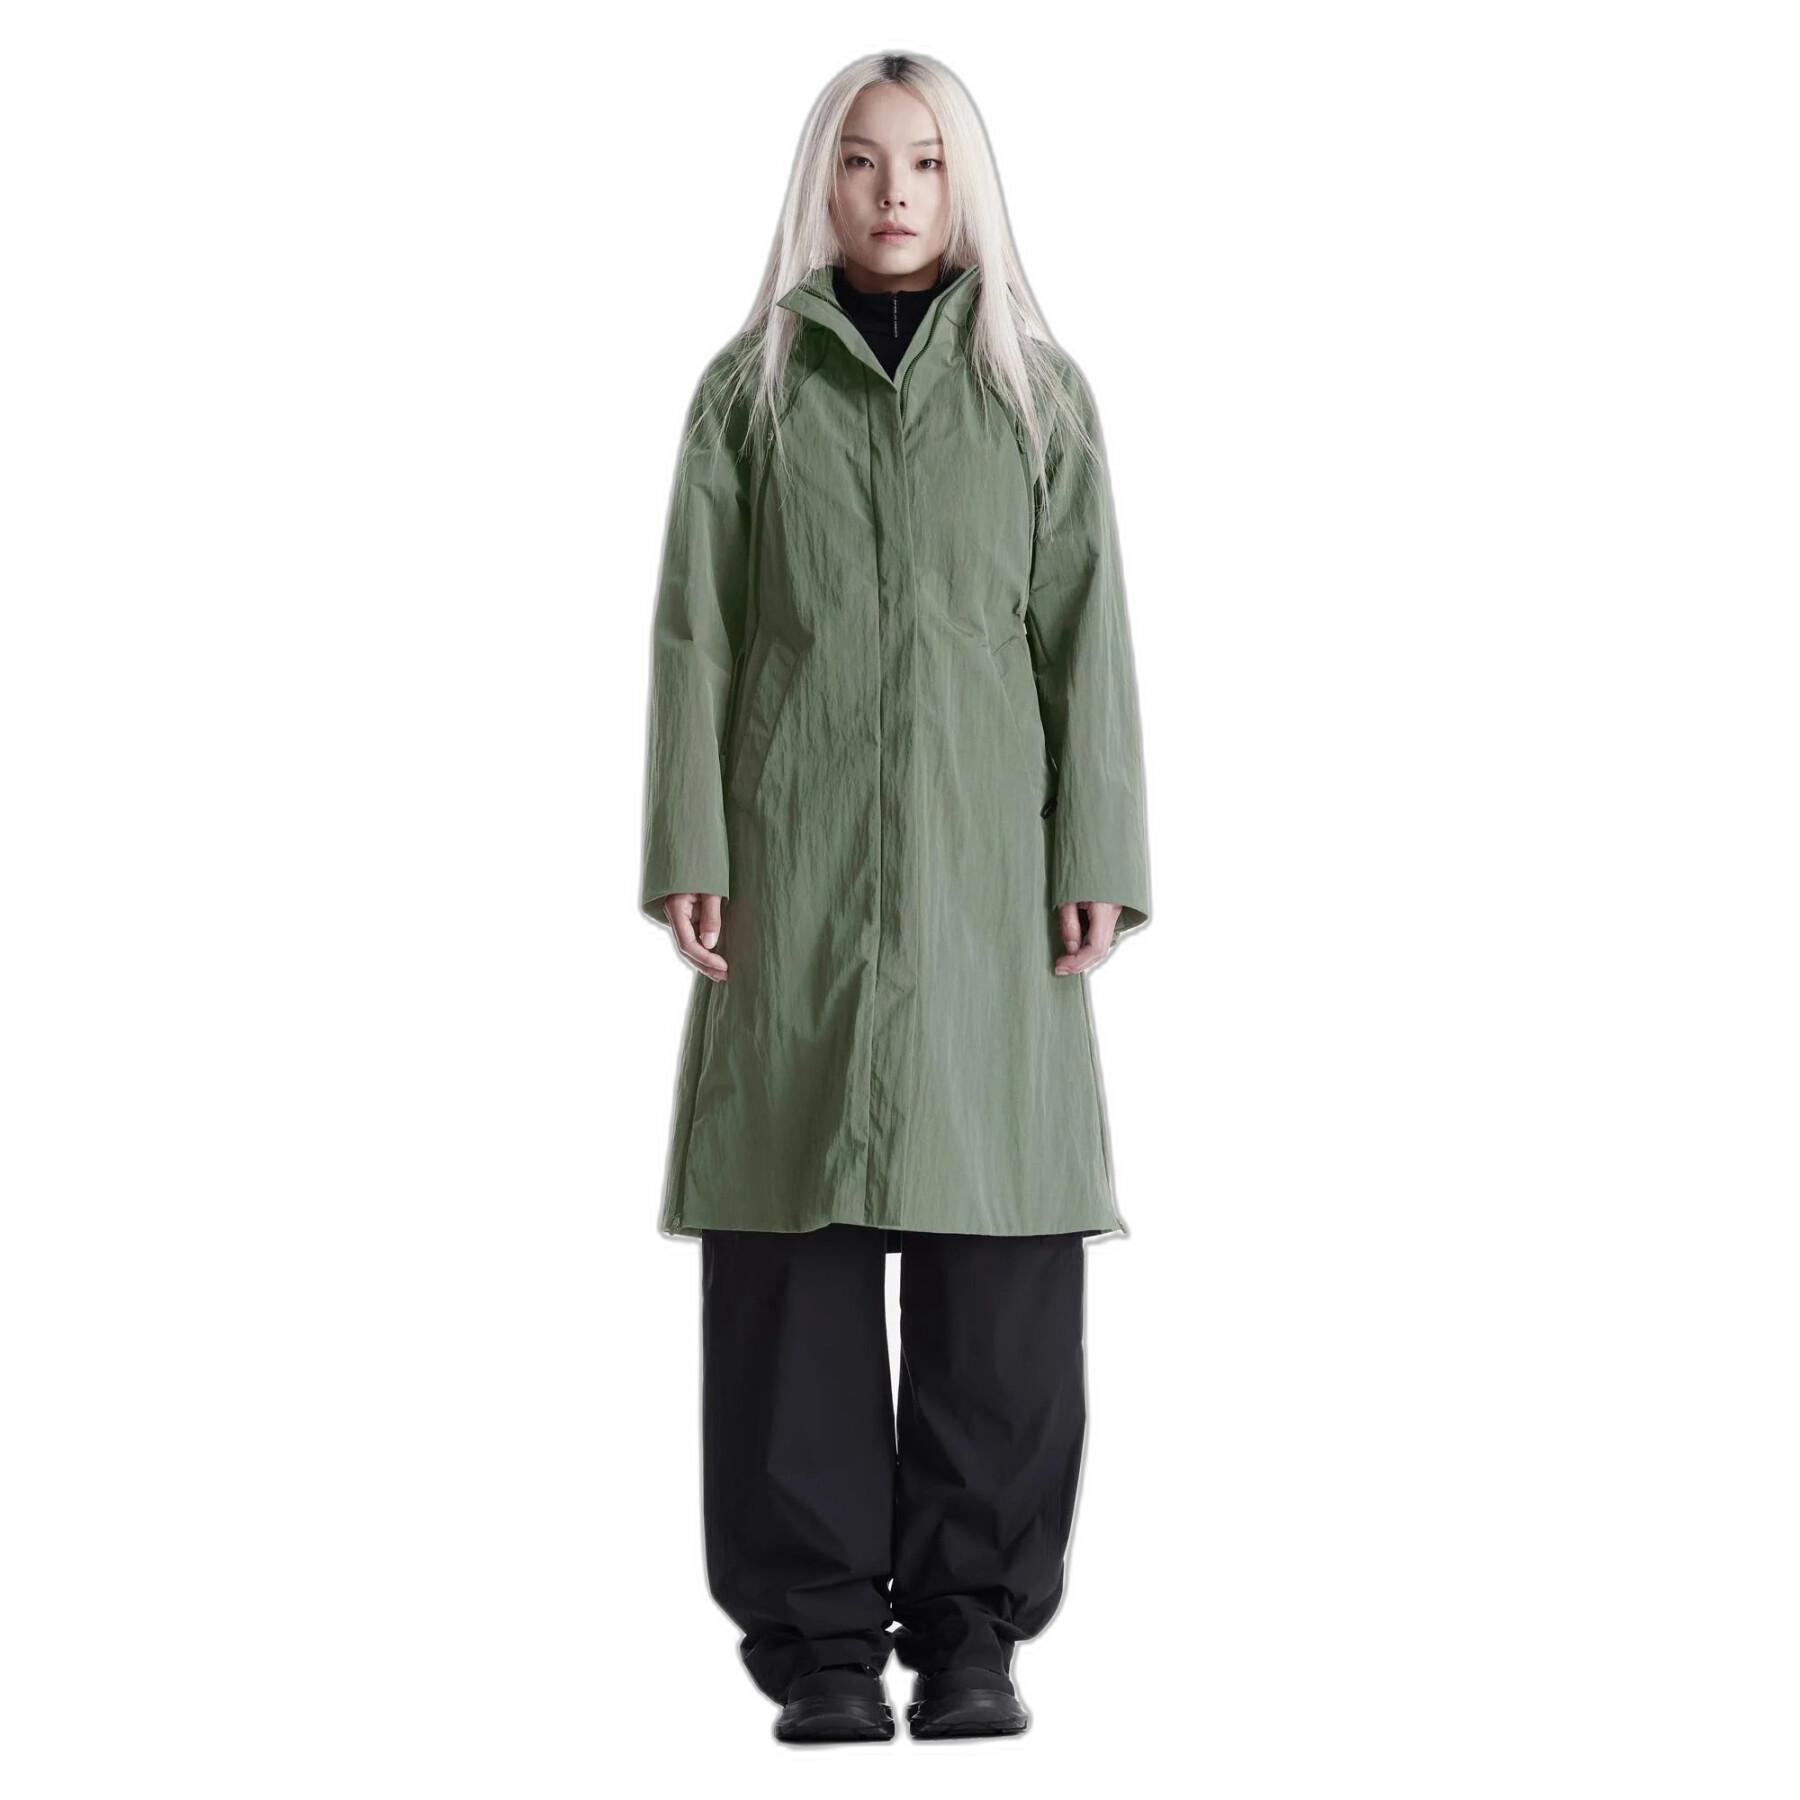 Waterproof trench coat for women Krakatau Qw416